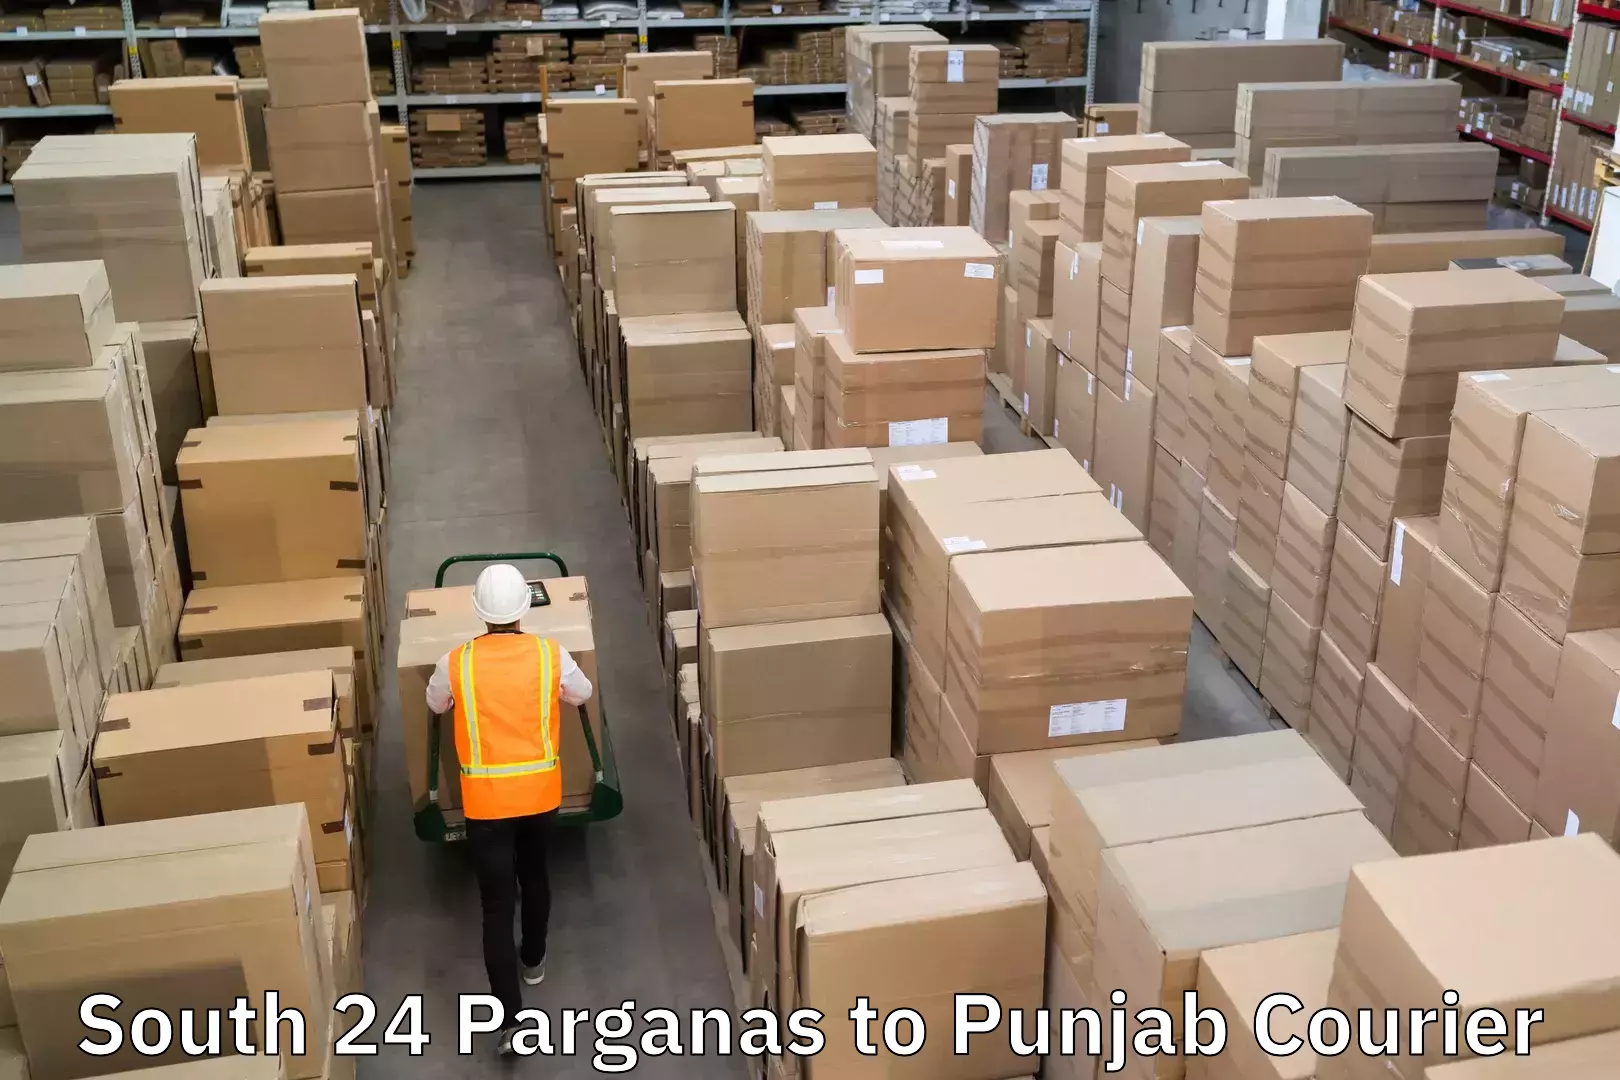 Courier insurance South 24 Parganas to Punjab